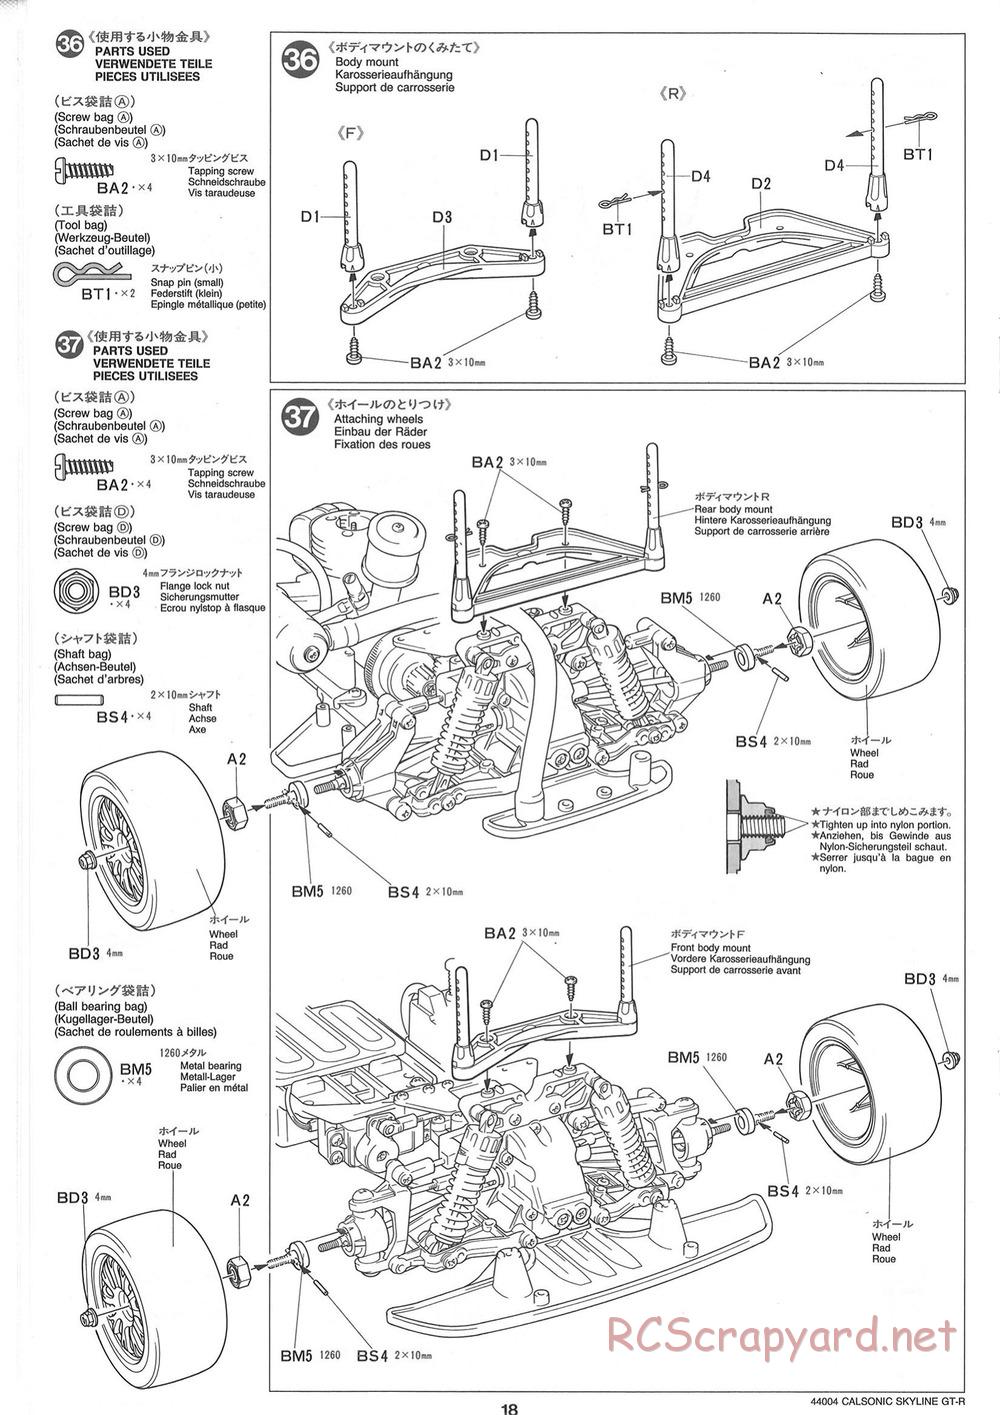 Tamiya - Calsonic GT-R - TGX Mk.1 Chassis - Manual - Page 18